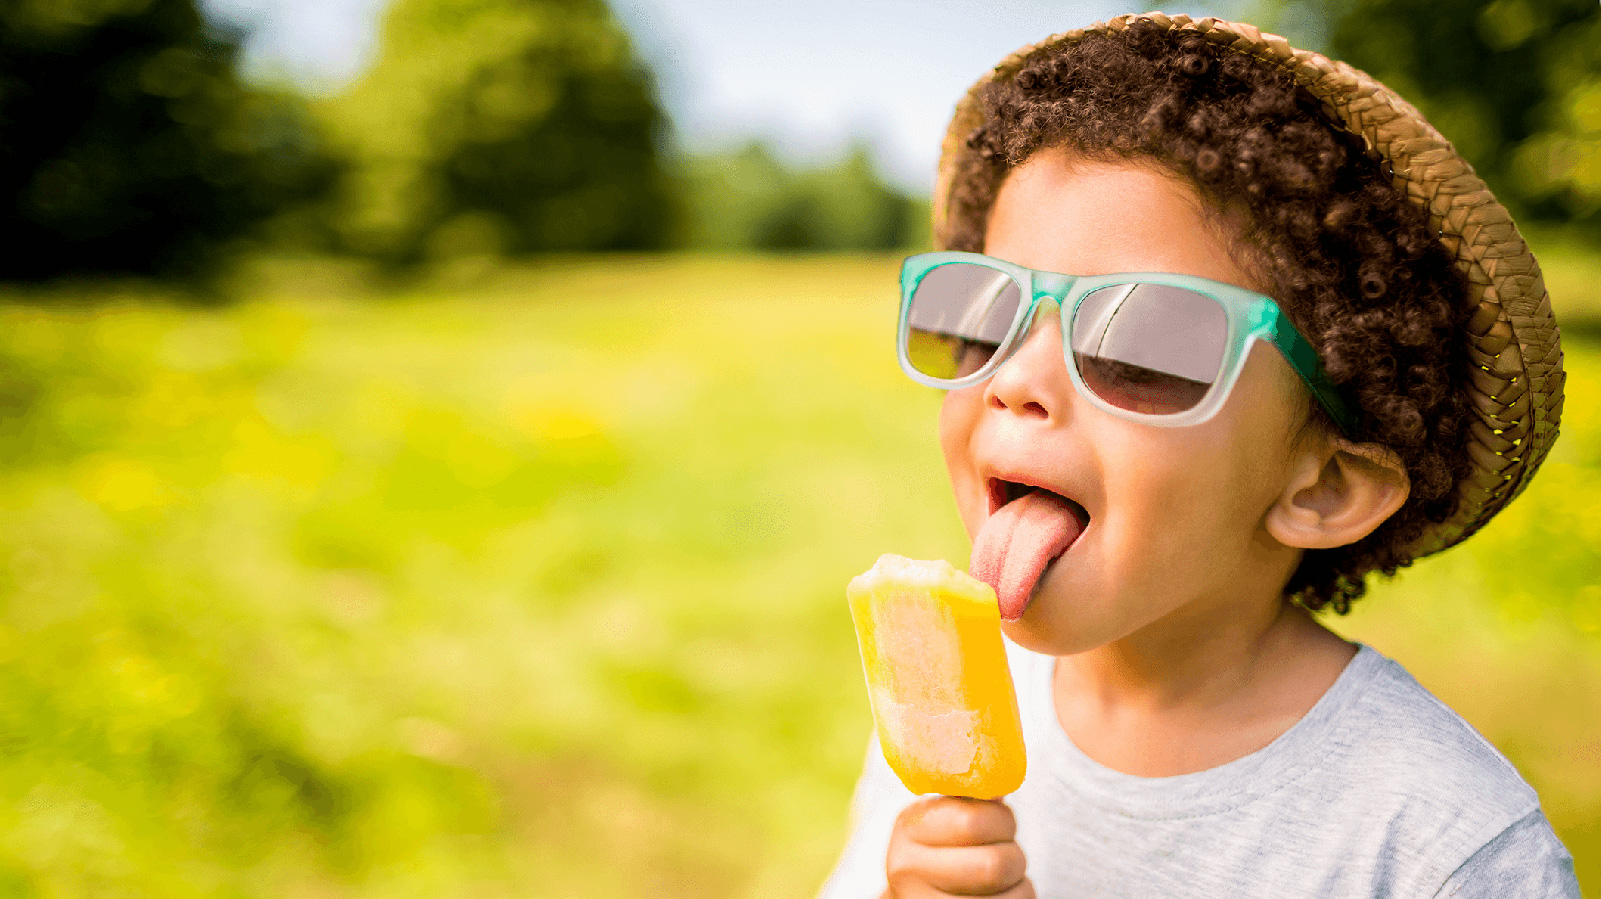 Little boy in grassy field licking a popsicle.